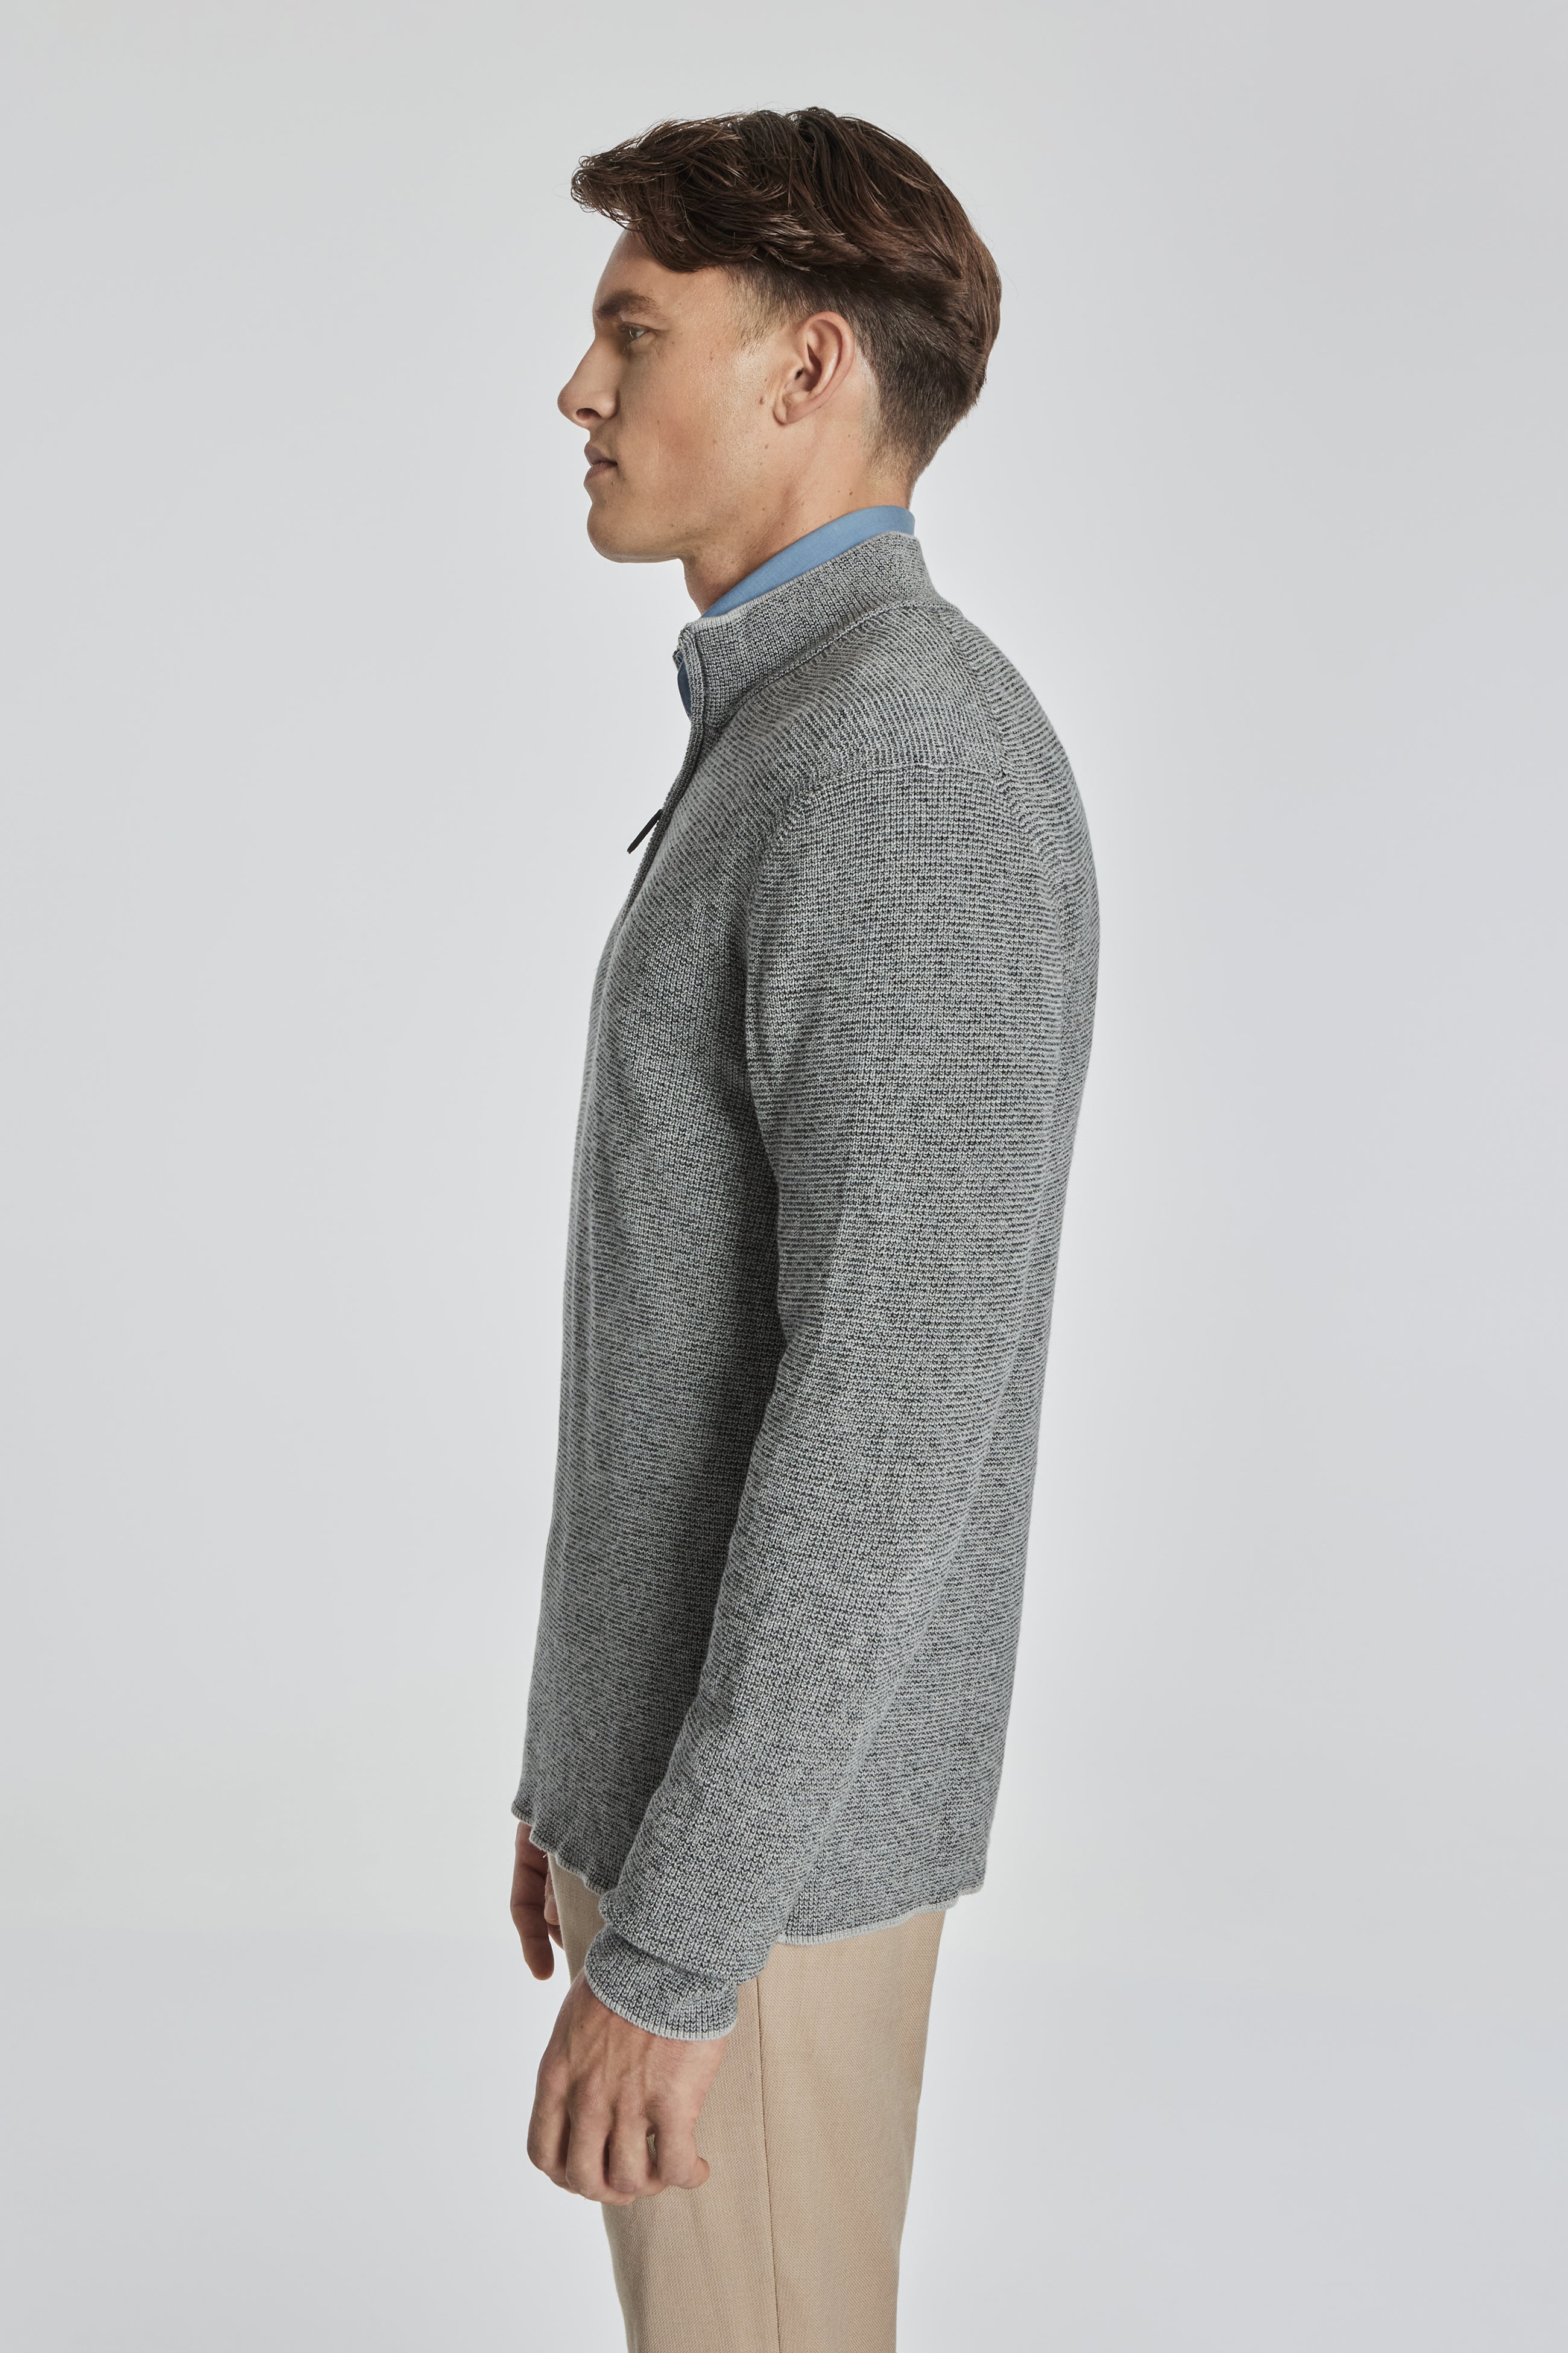 Alt view 3 Daulac Melange Cotton Quarter Zip Sweater in Charcoal